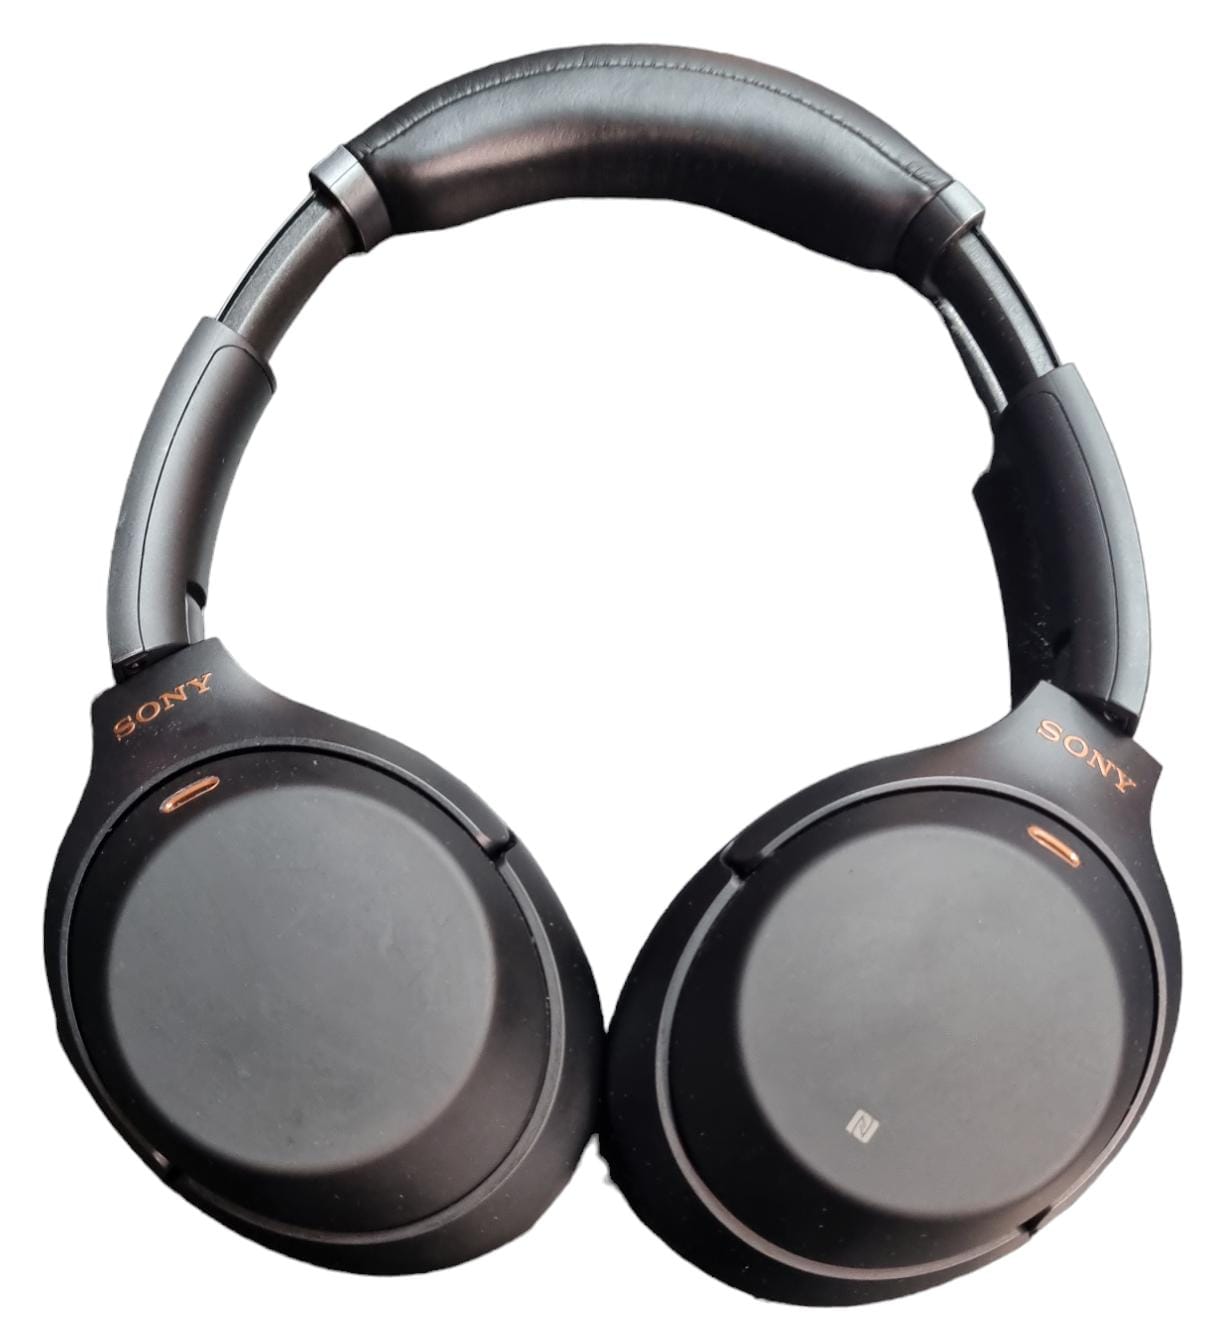 Sony WH-1000XM3 Noise Cancelling Wireless Headphones - Black - No Box